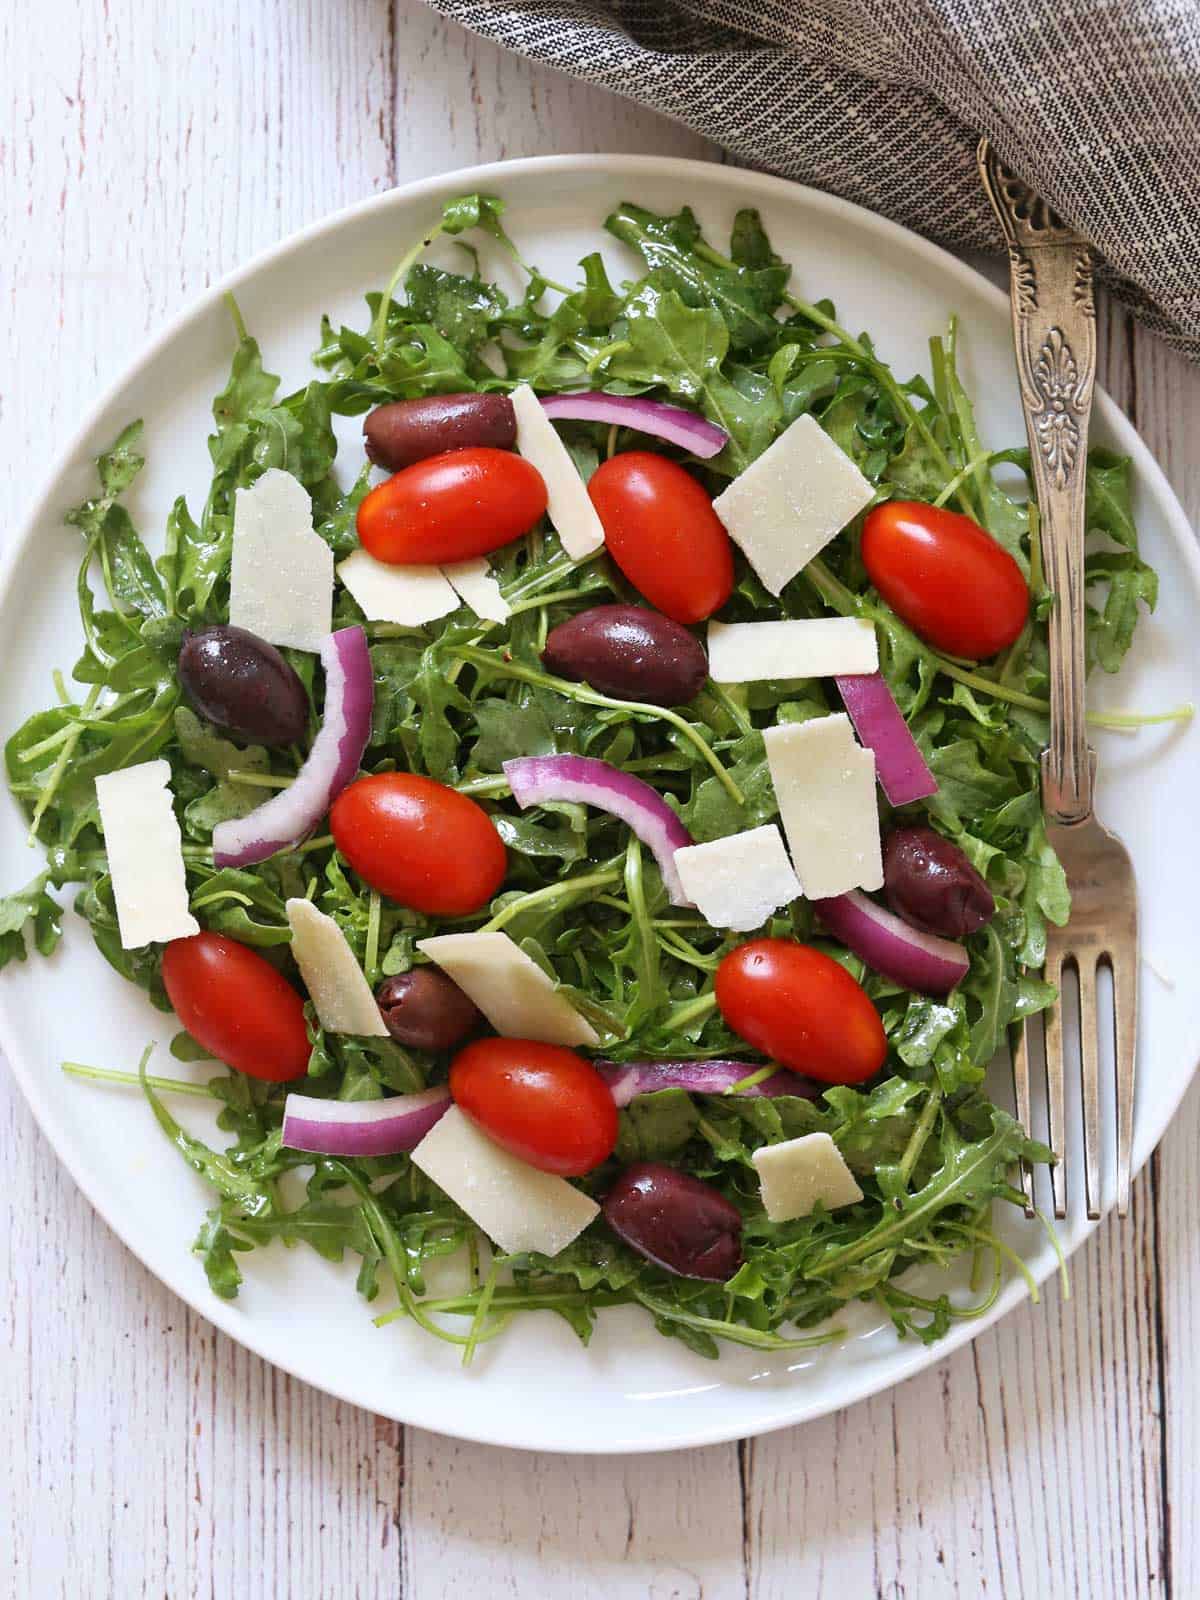 Arugula salad is served on a white plate.